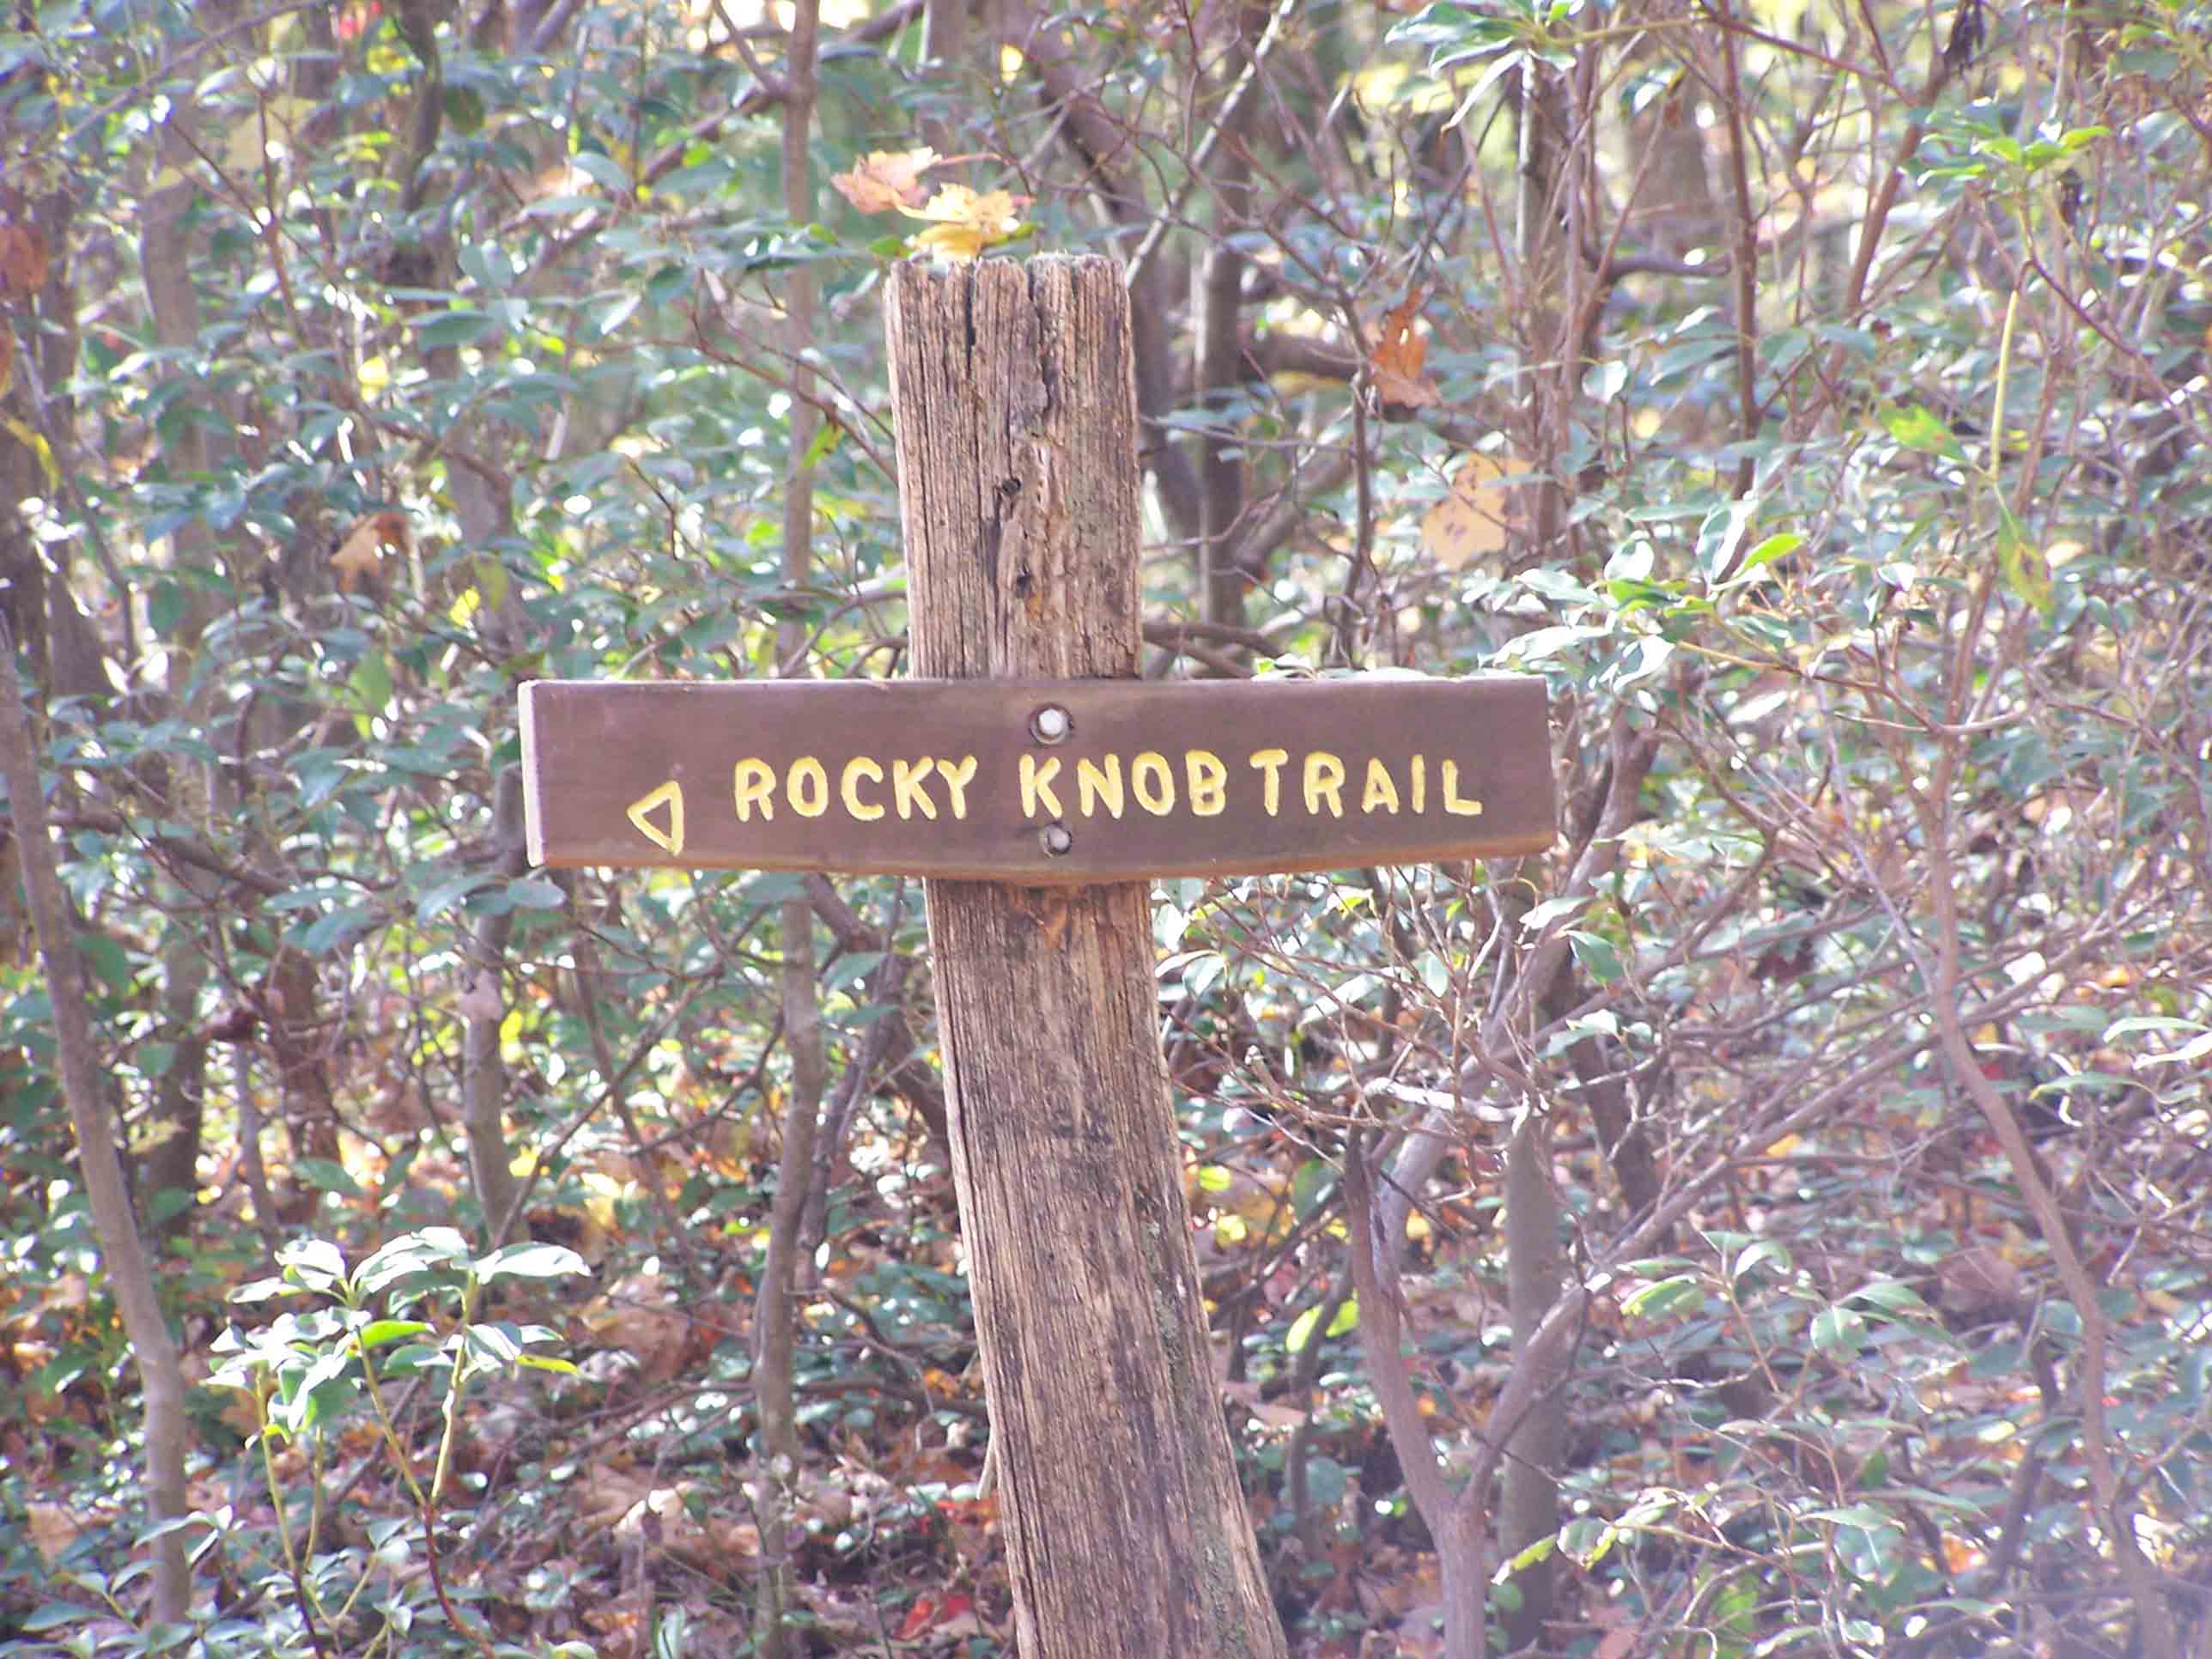 Rocky Knob Trail mm 11.0. Courtesy at@rohland.org